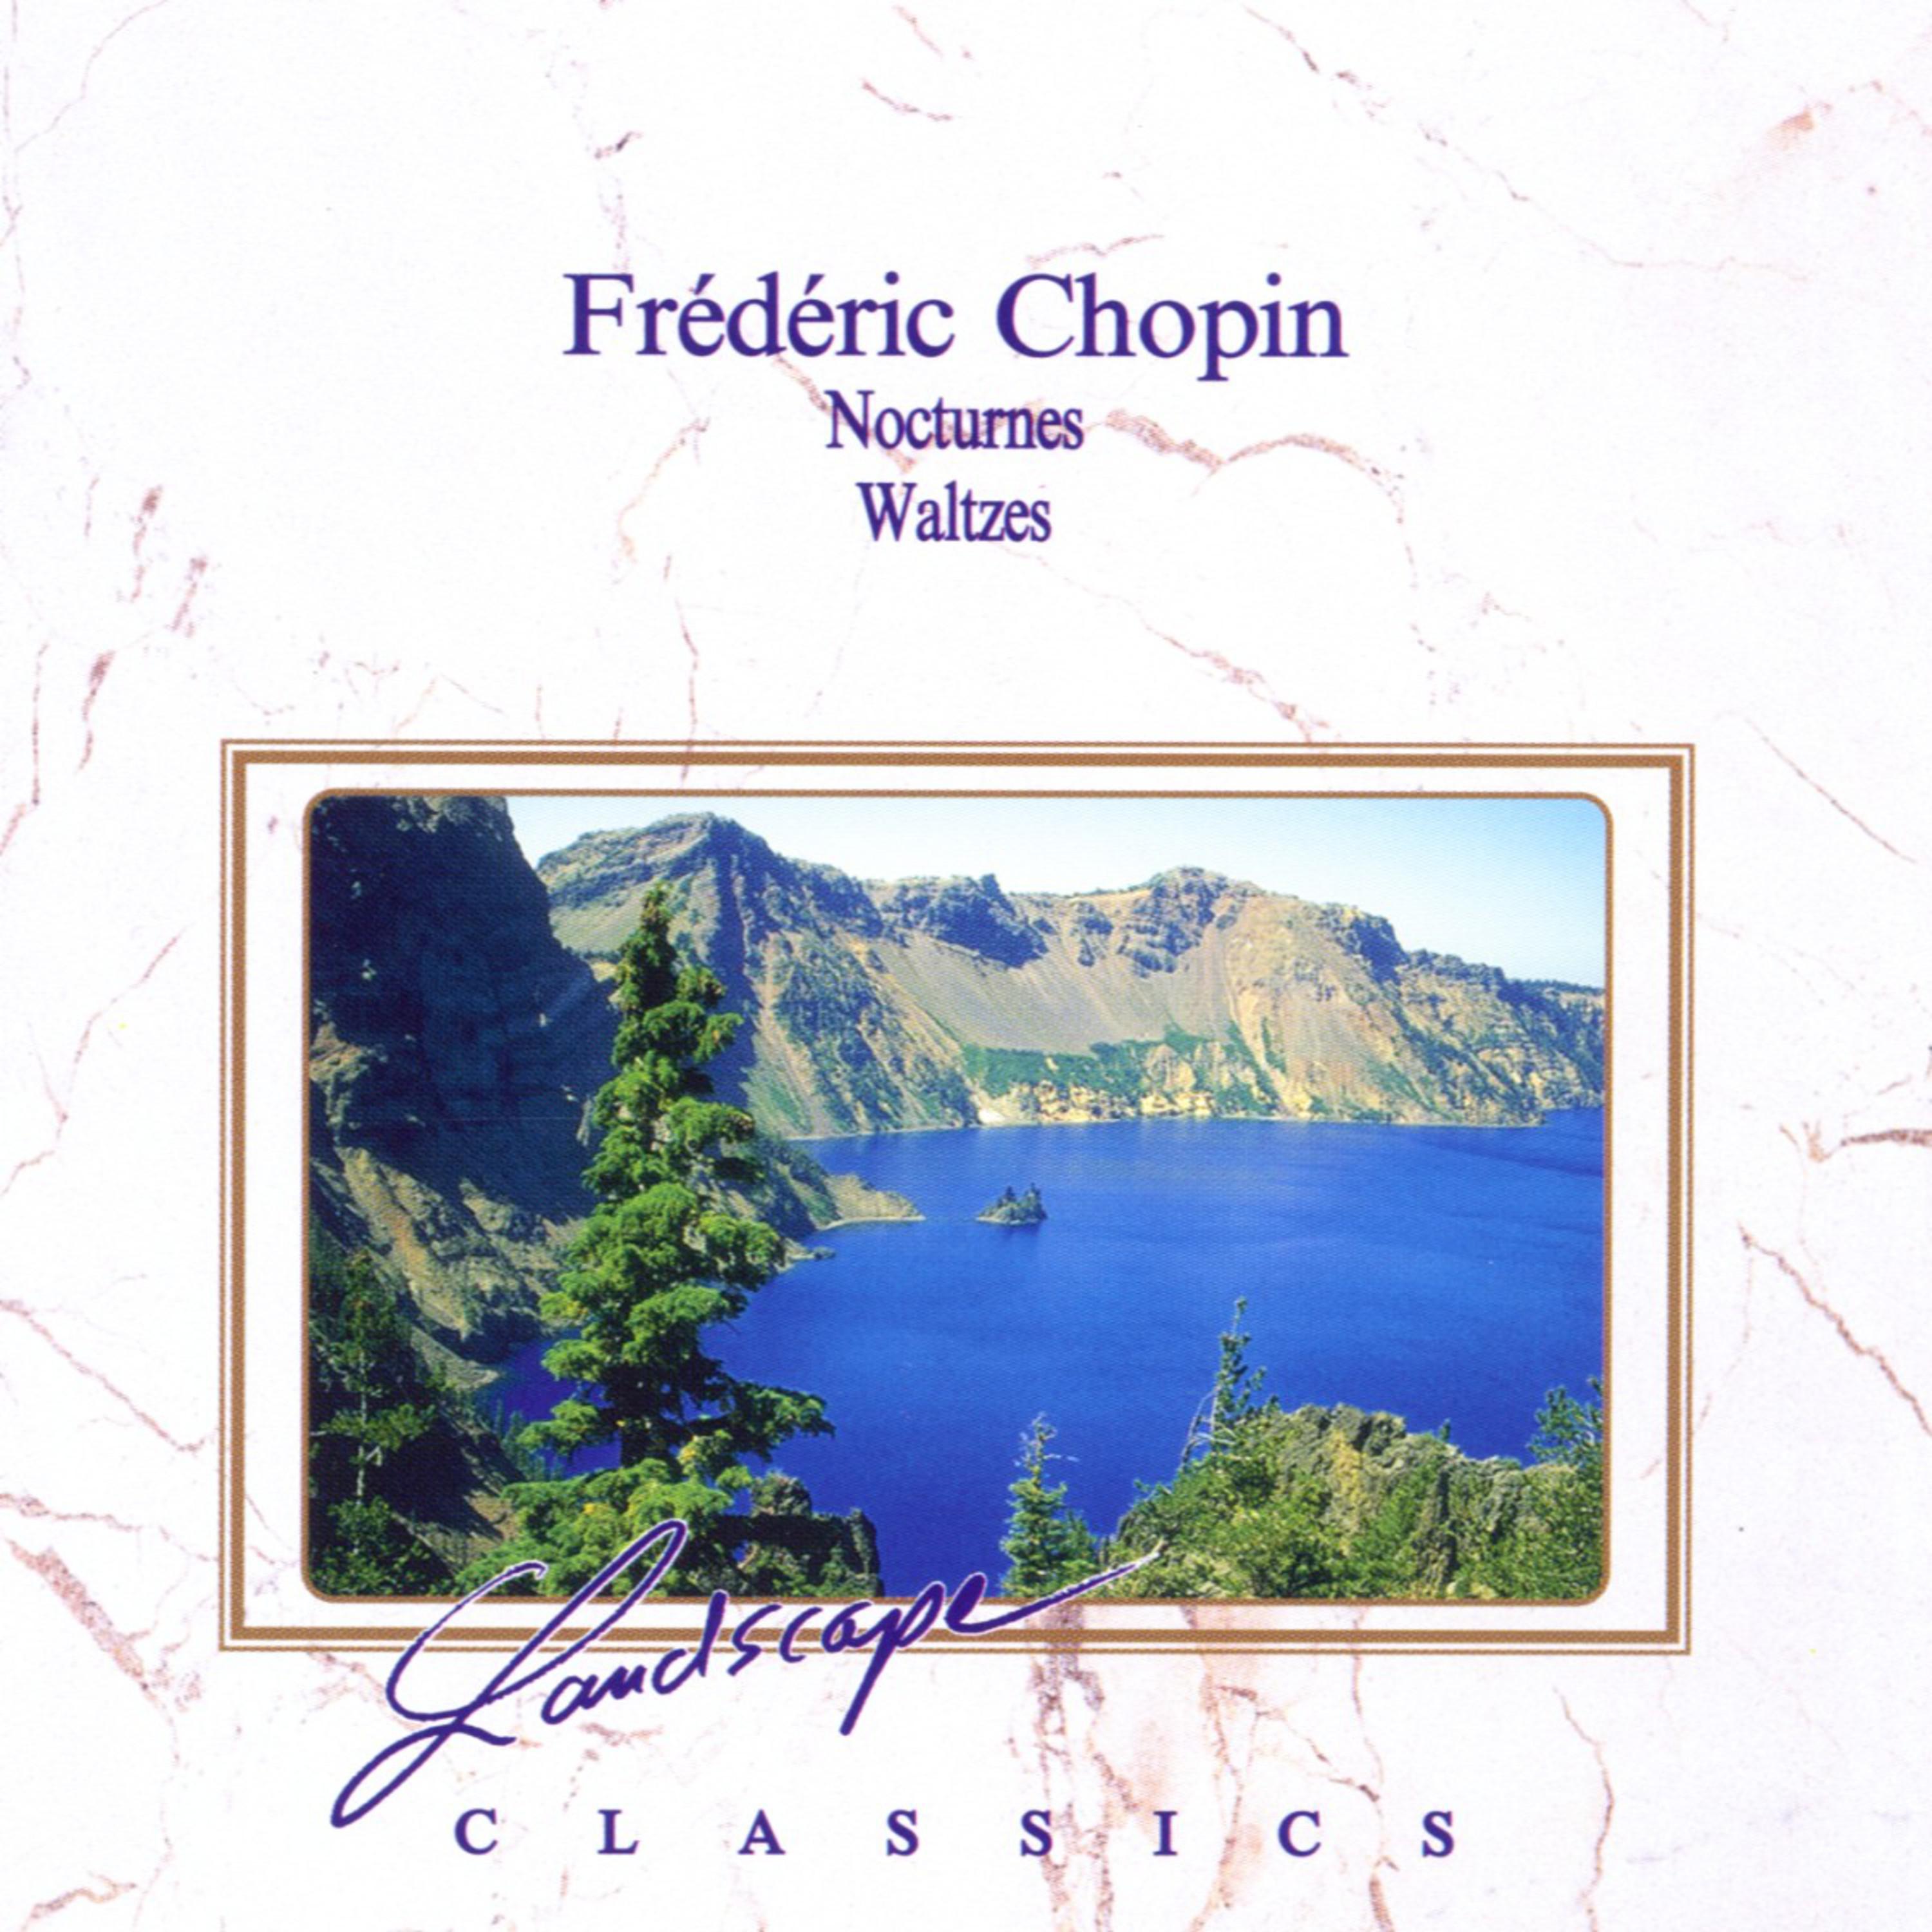 Fre de ric Chopin: Nocturnes und Walzer